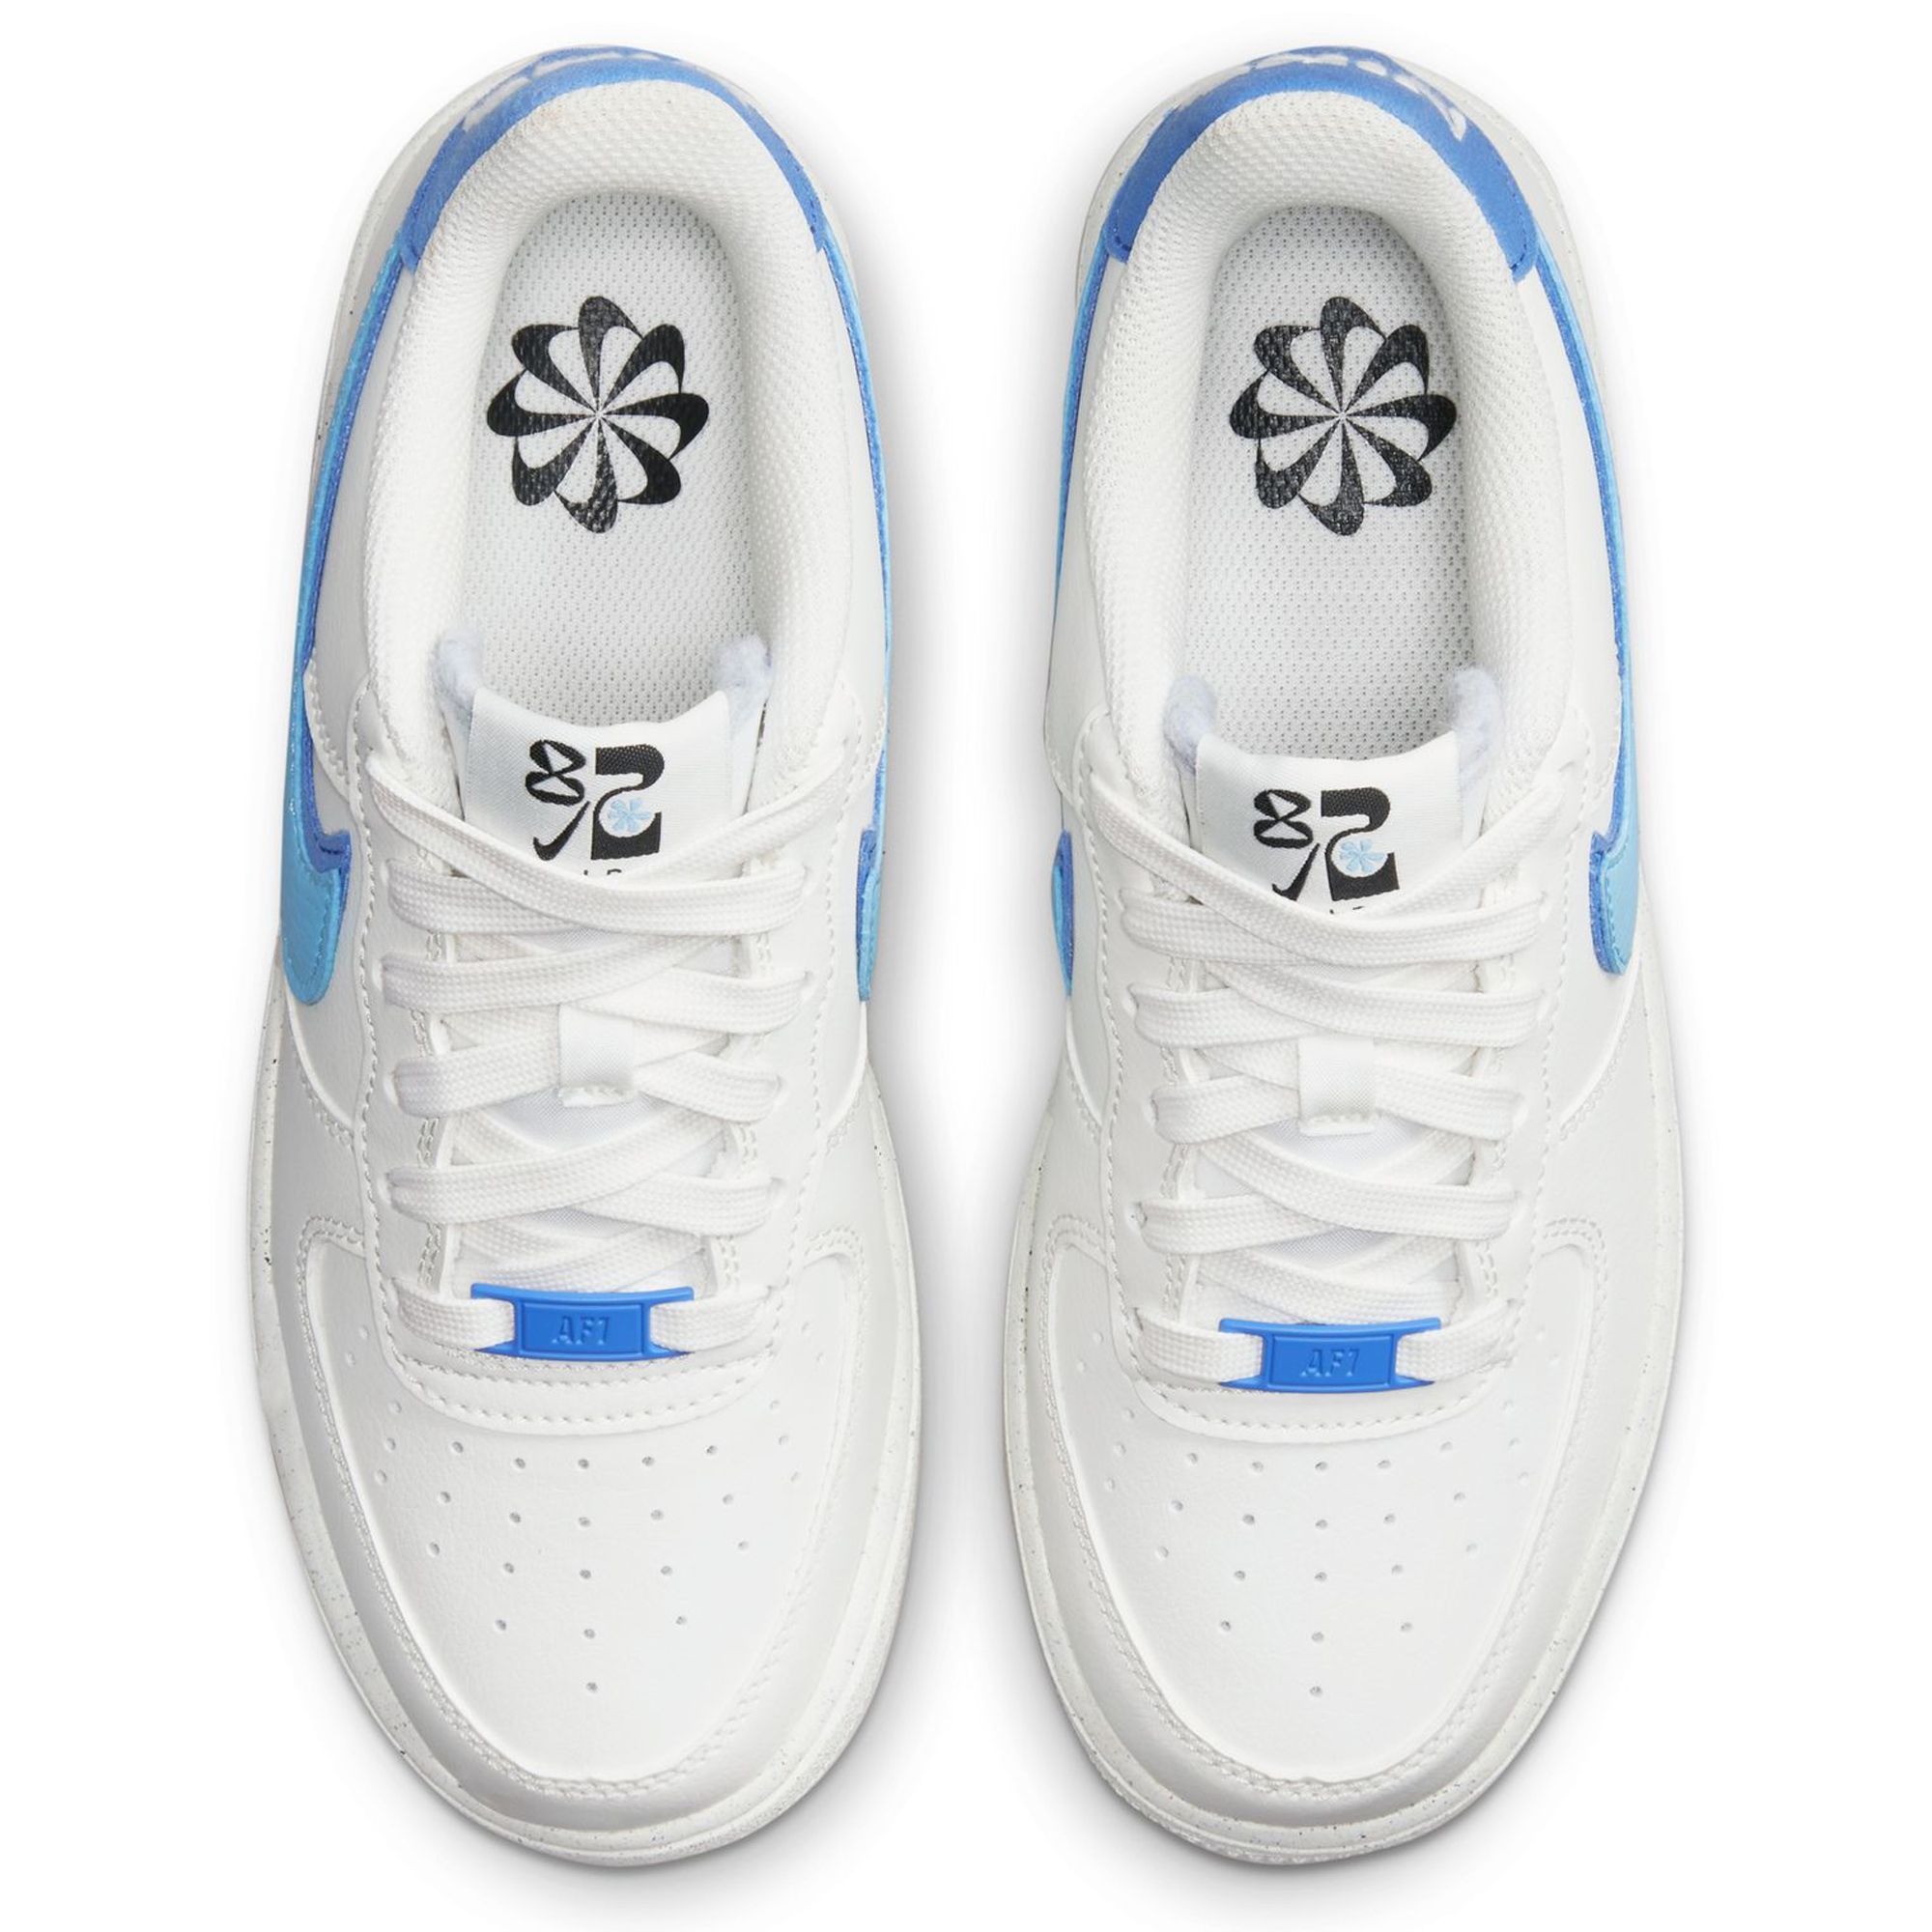 Nike Sportswear AIR FORCE 1 - Zapatillas - sail/blue chill/med